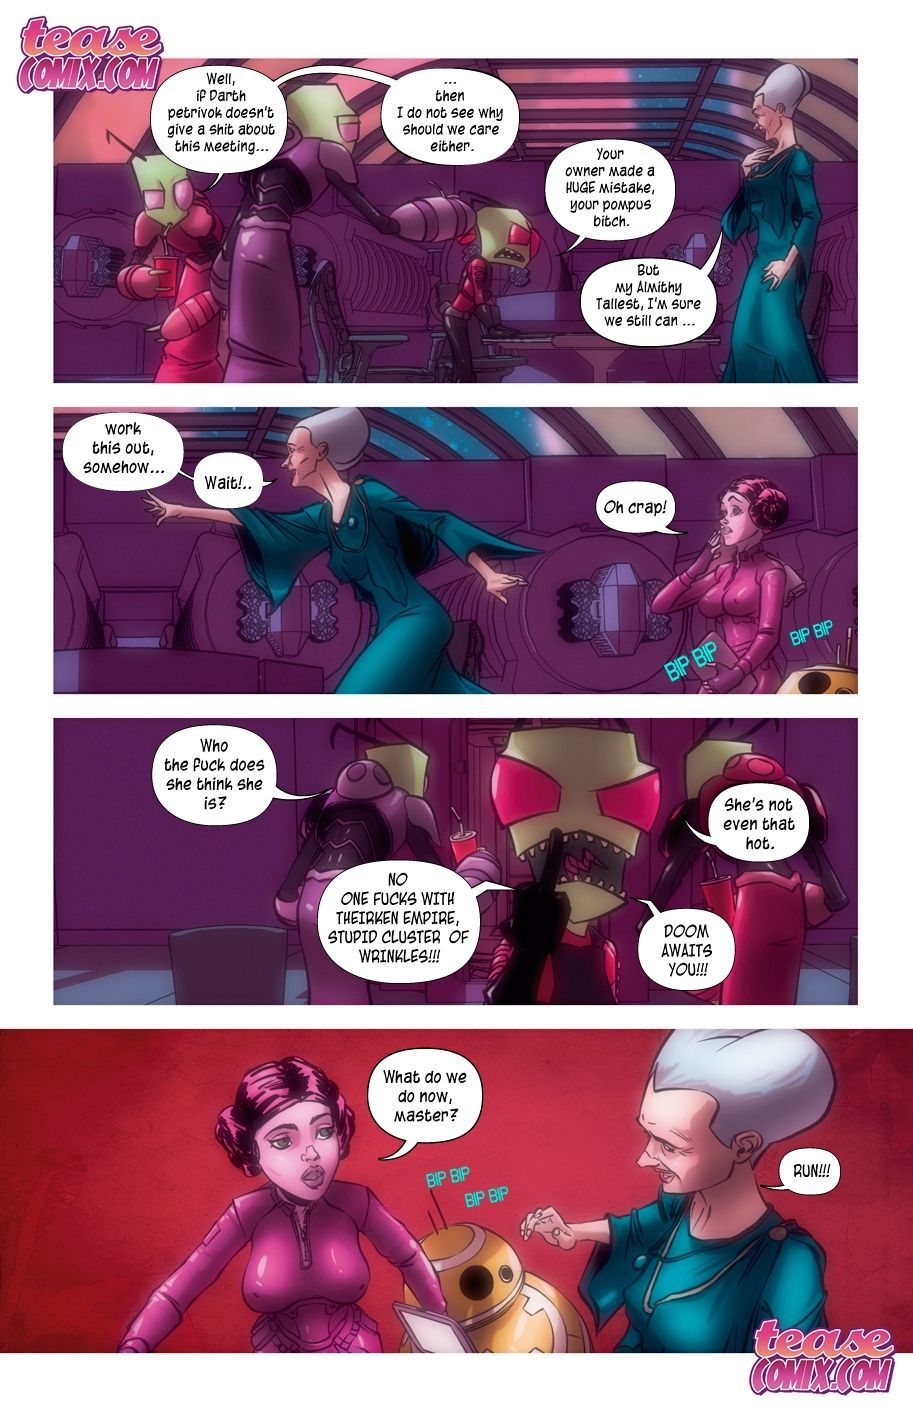 Space Slut (Star Wars) by Kaizen2582 page 7